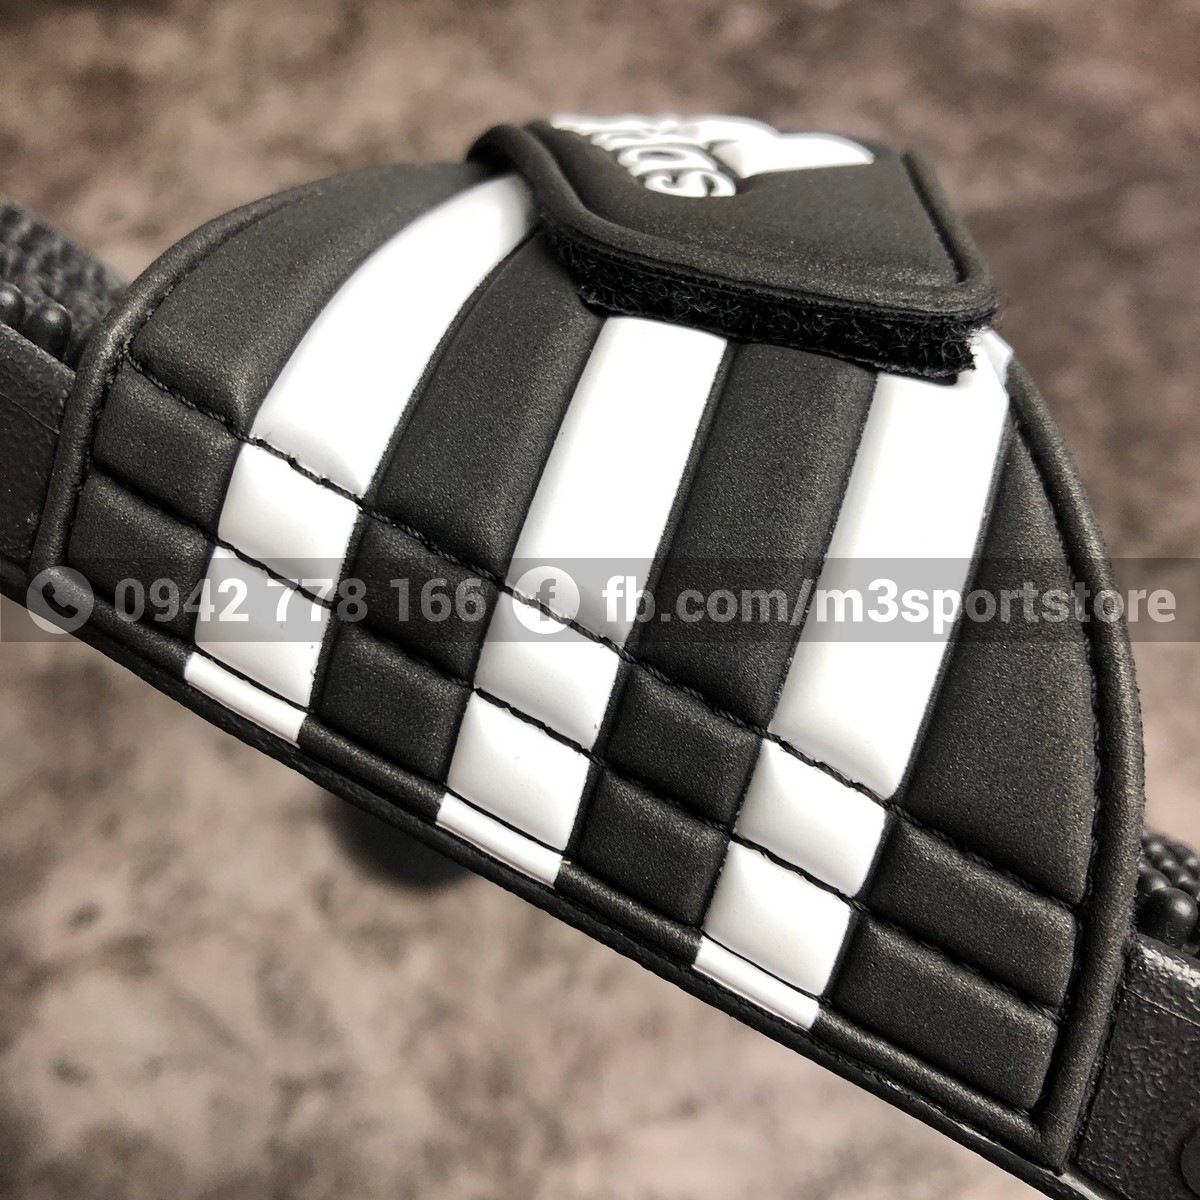 Dép thể thao nam Adidas Adissage F35580